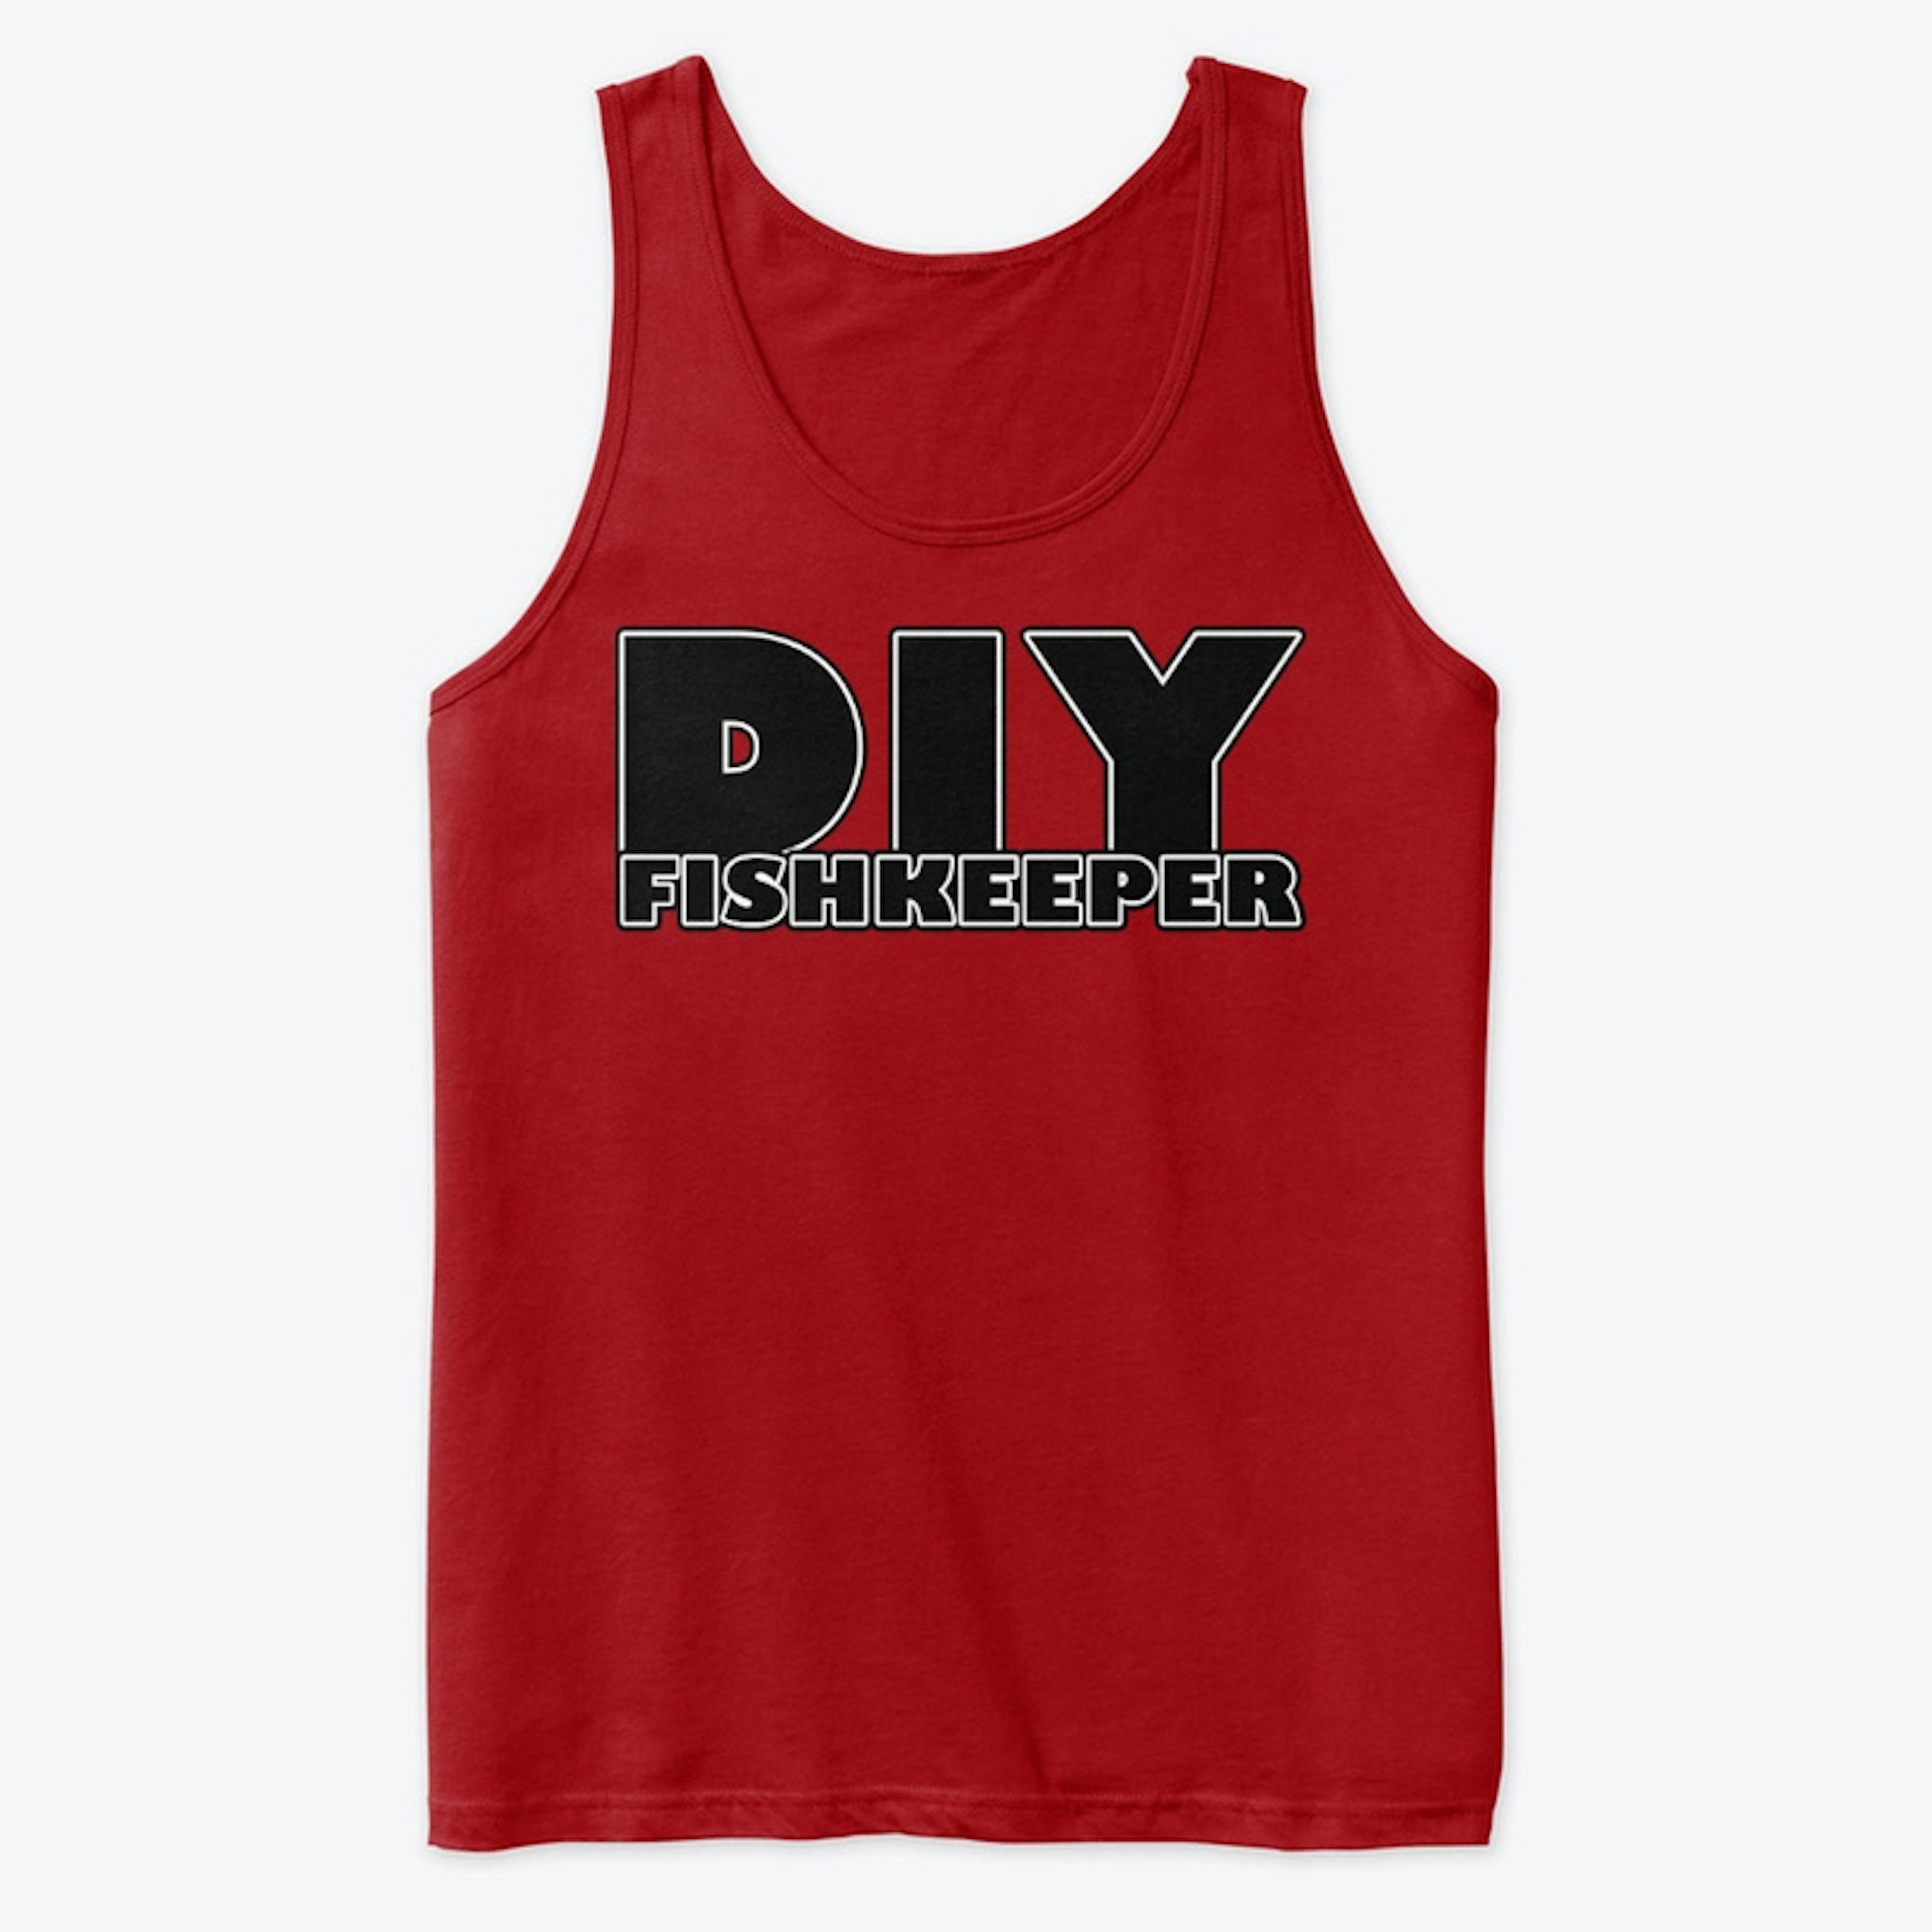 DIY fishkeeper tank top